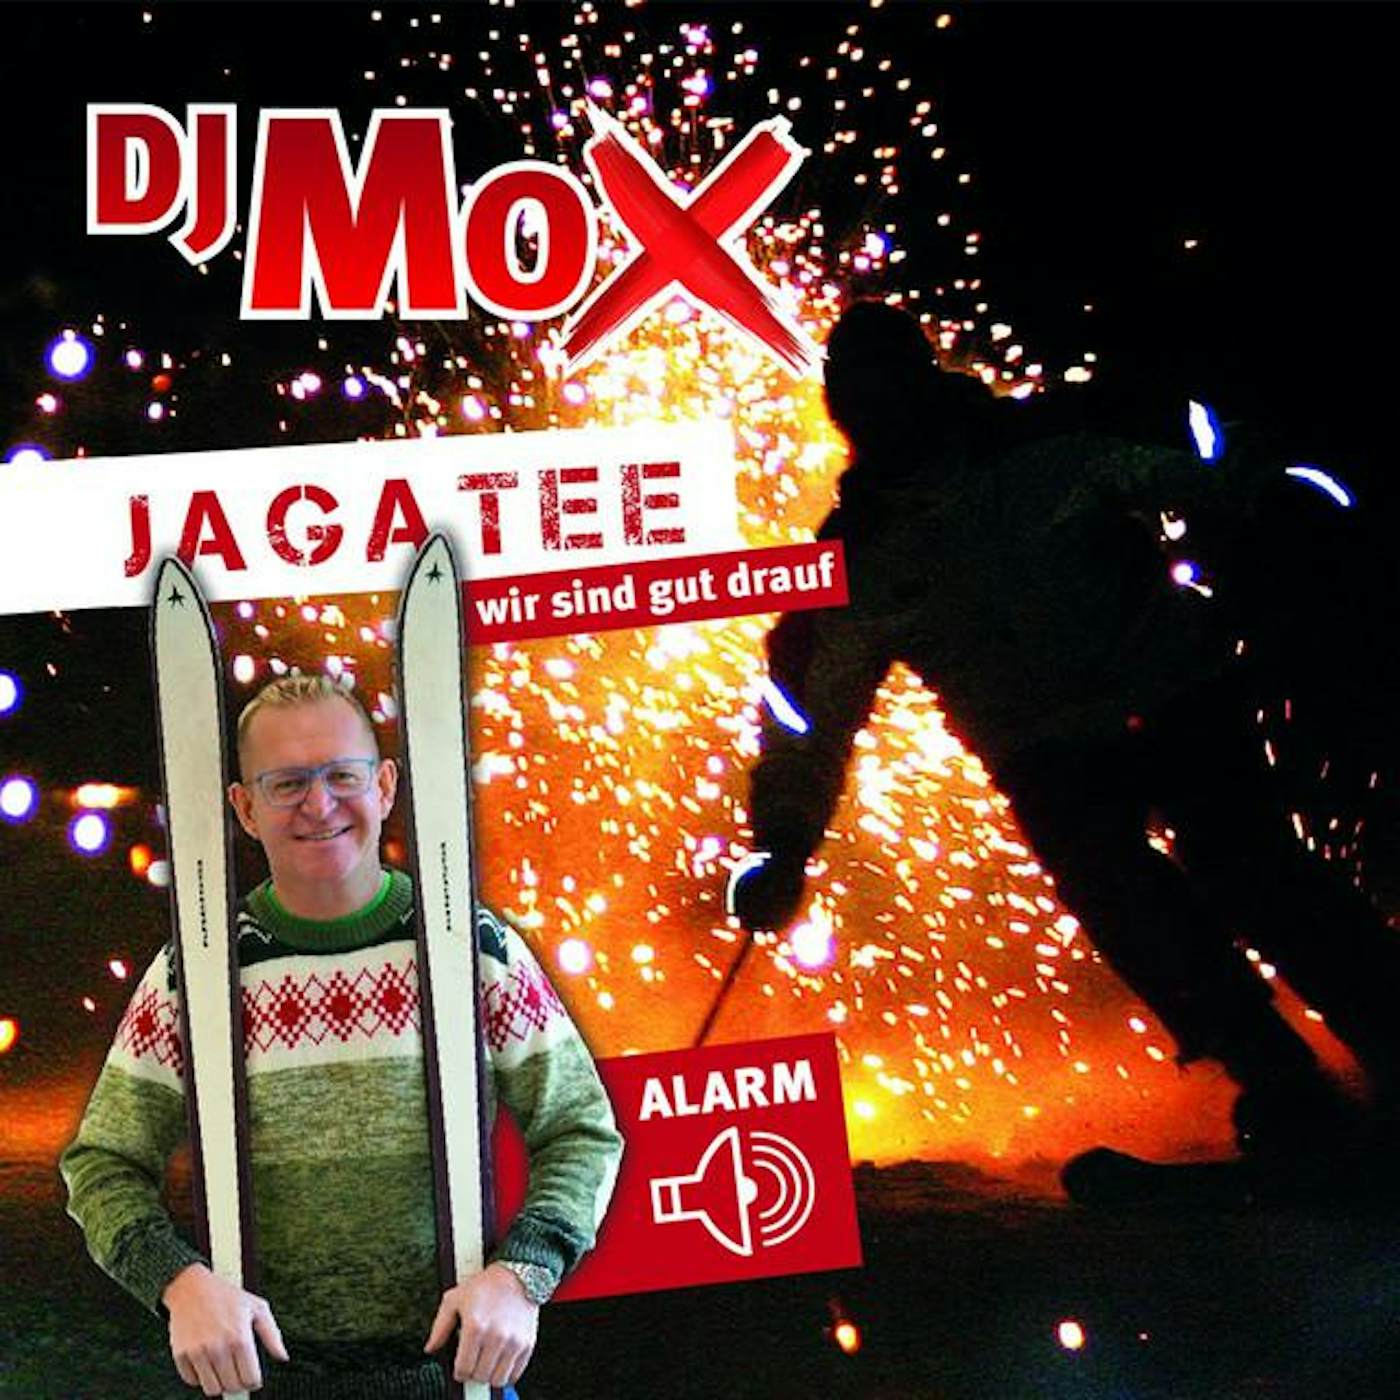 DJ Mox